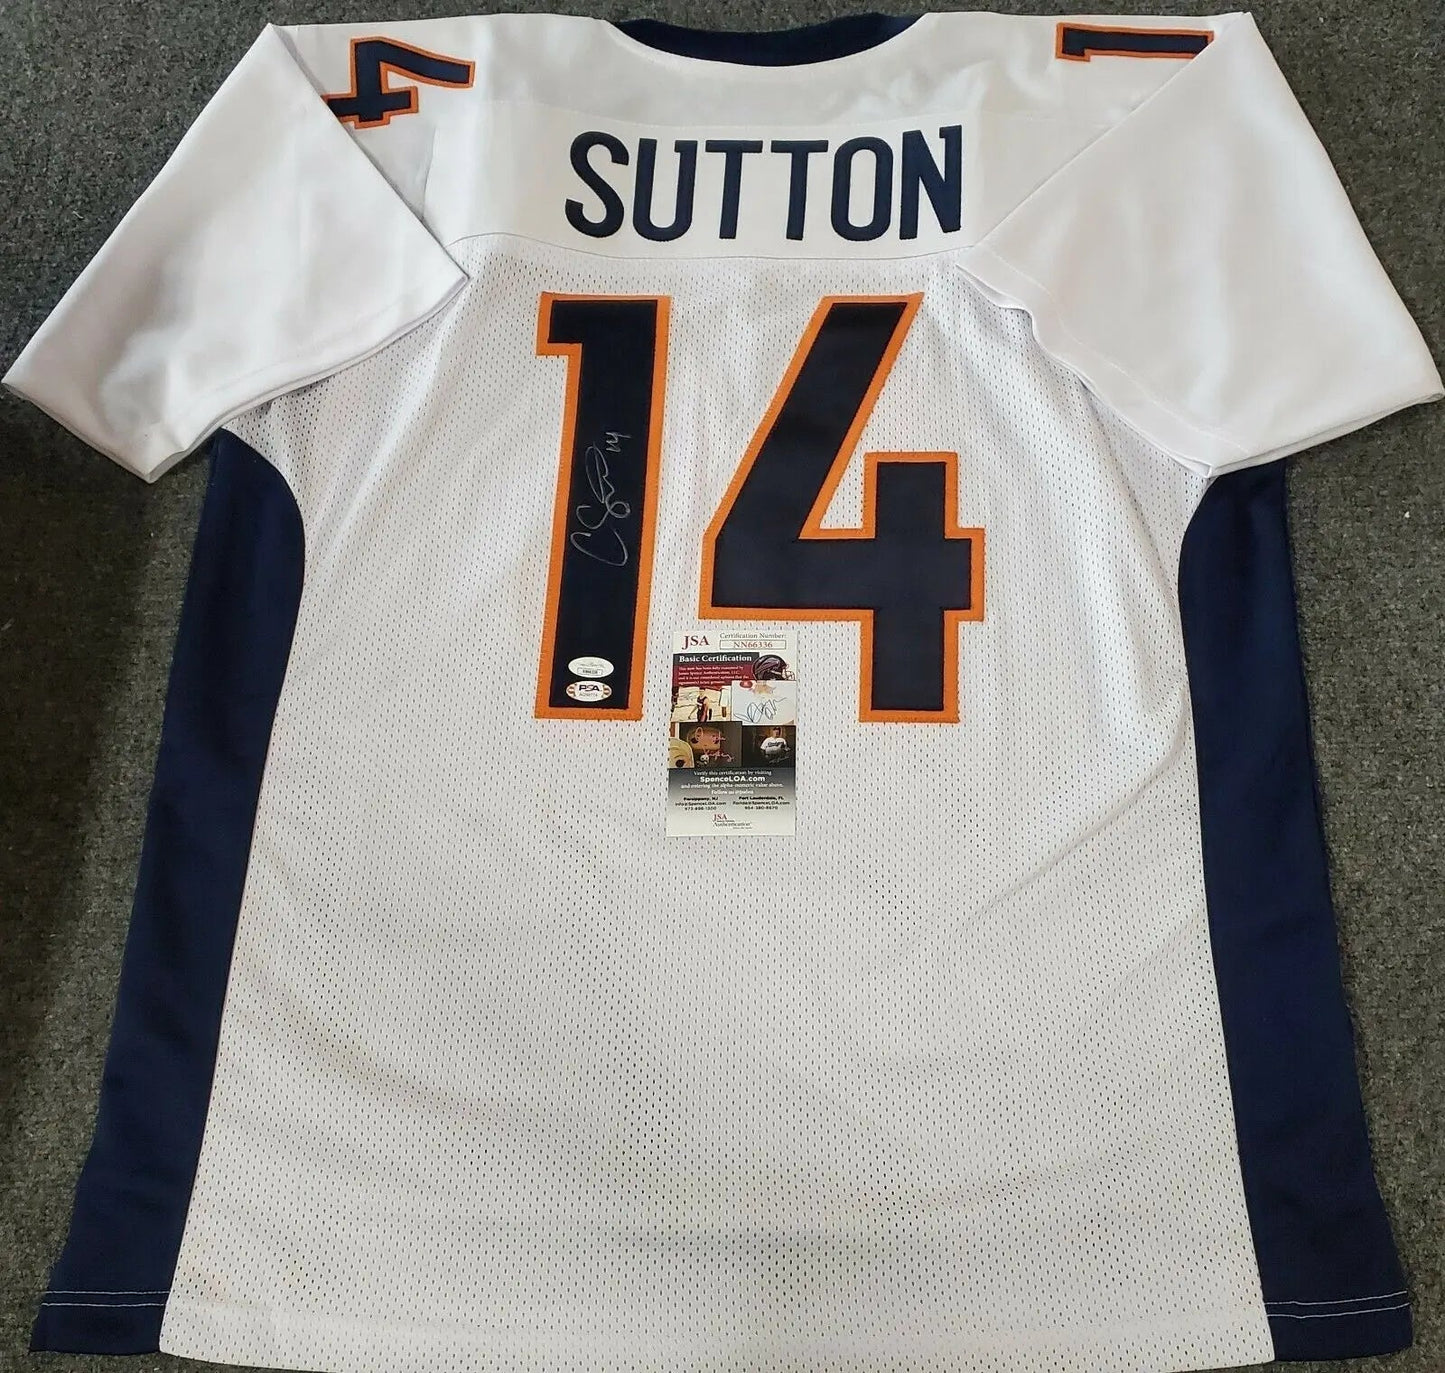 MVP Authentics Denver Broncos Courtland Sutton Autographed Signed Jersey Jsa  Coa 116.10 sports jersey framing , jersey framing